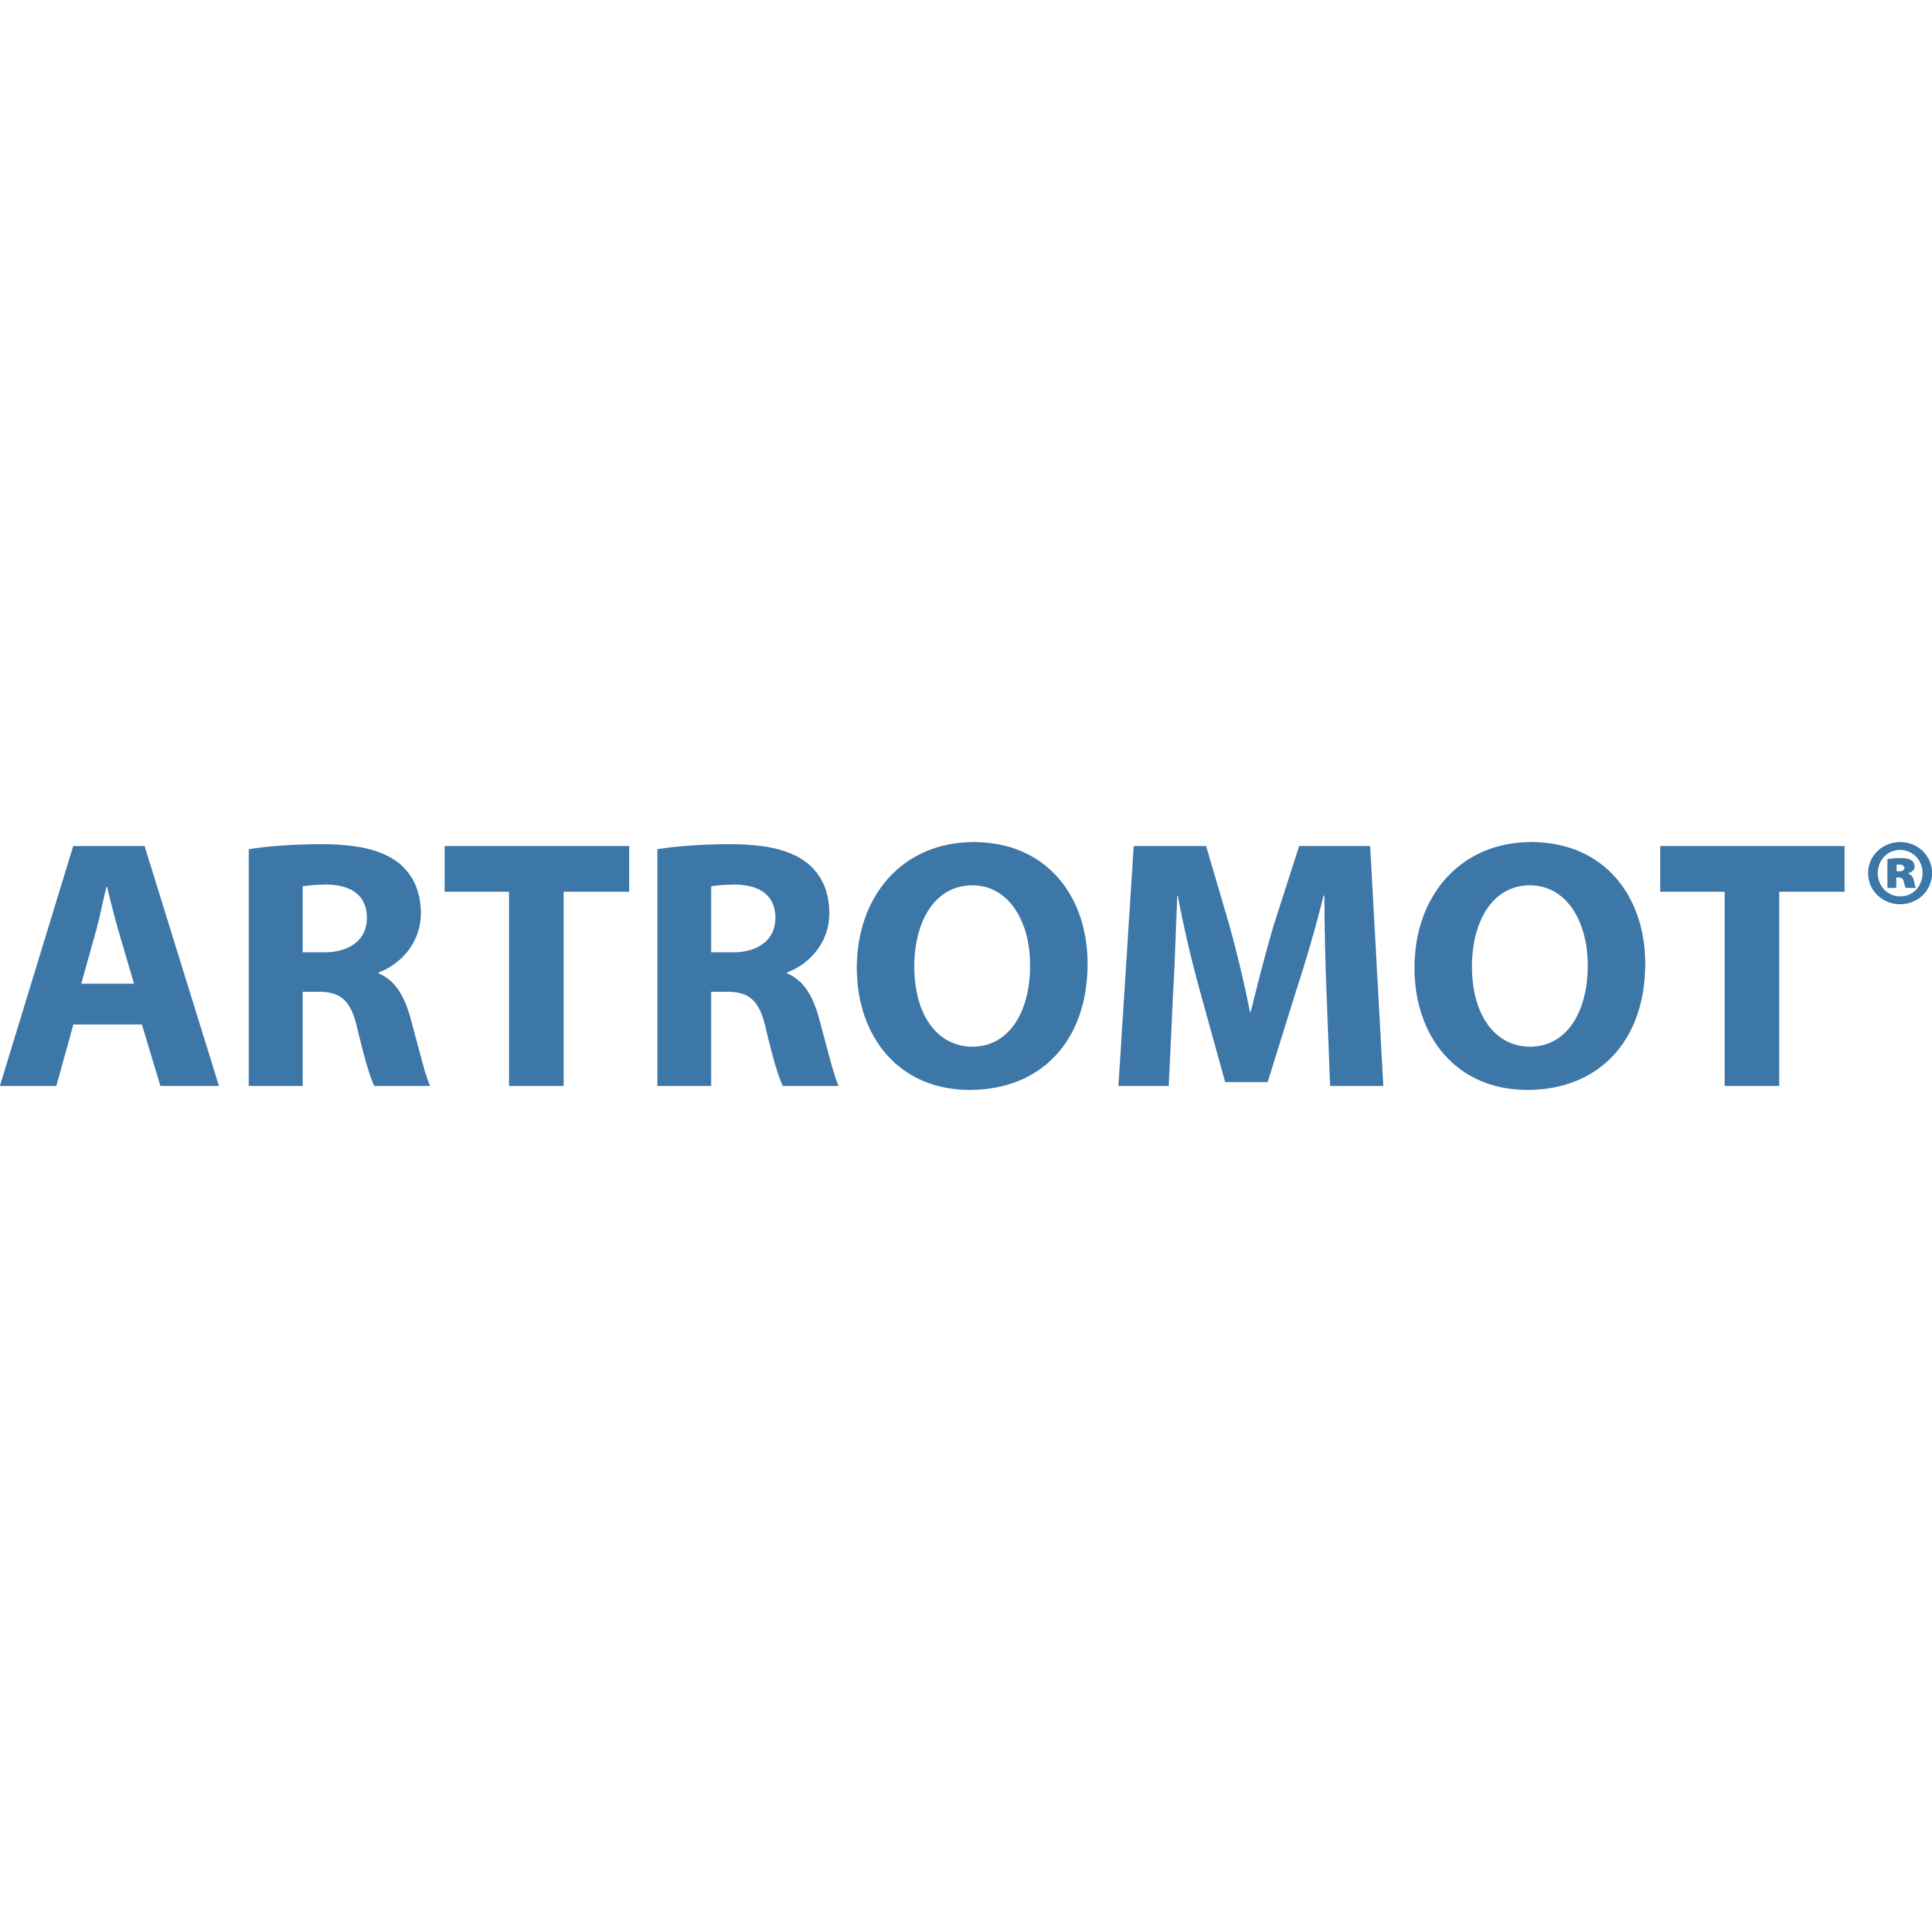 ARTROMOT logo